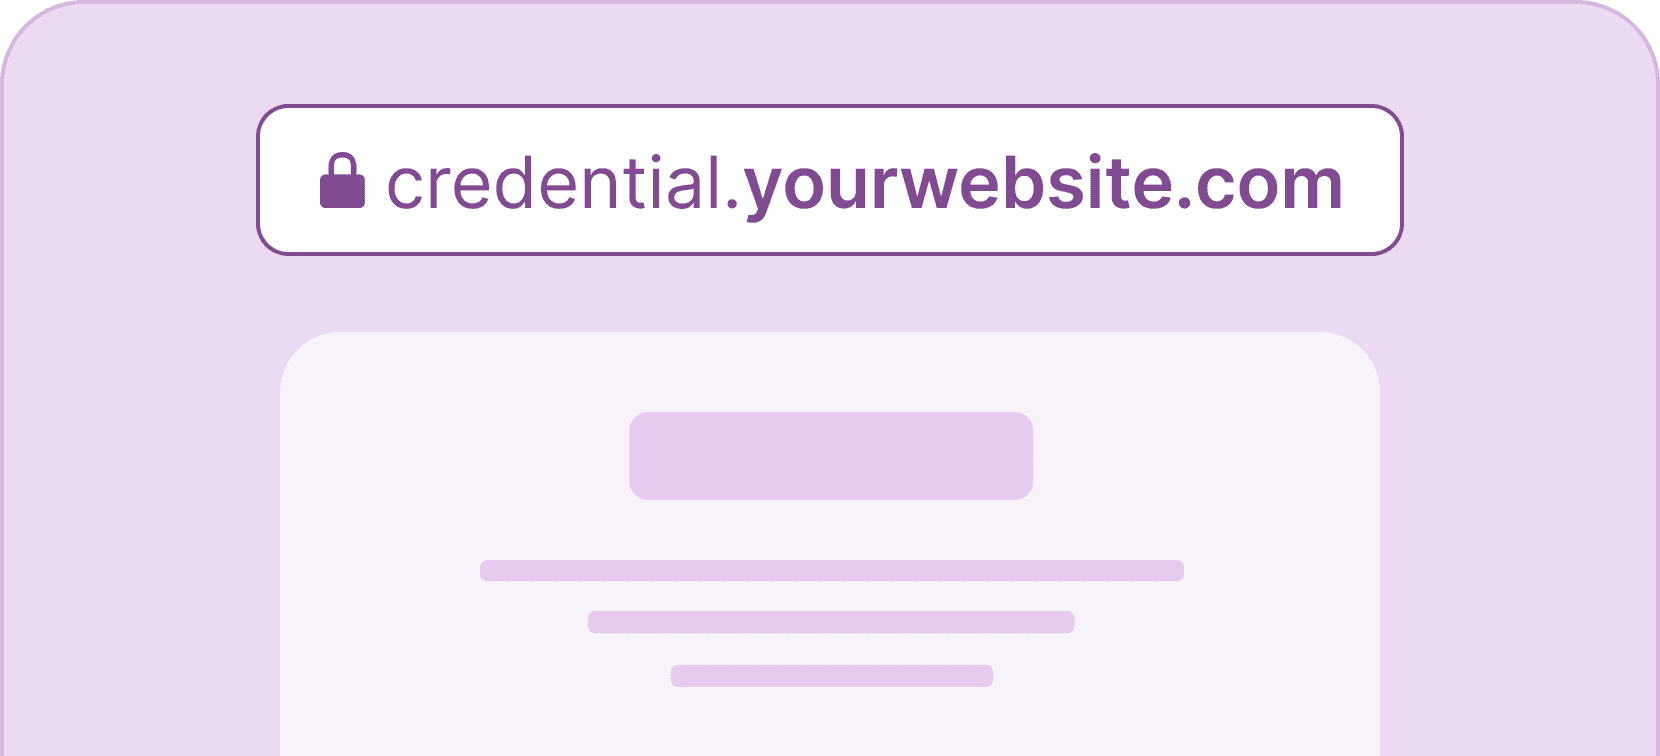 Credentials custom domain - Certifier features